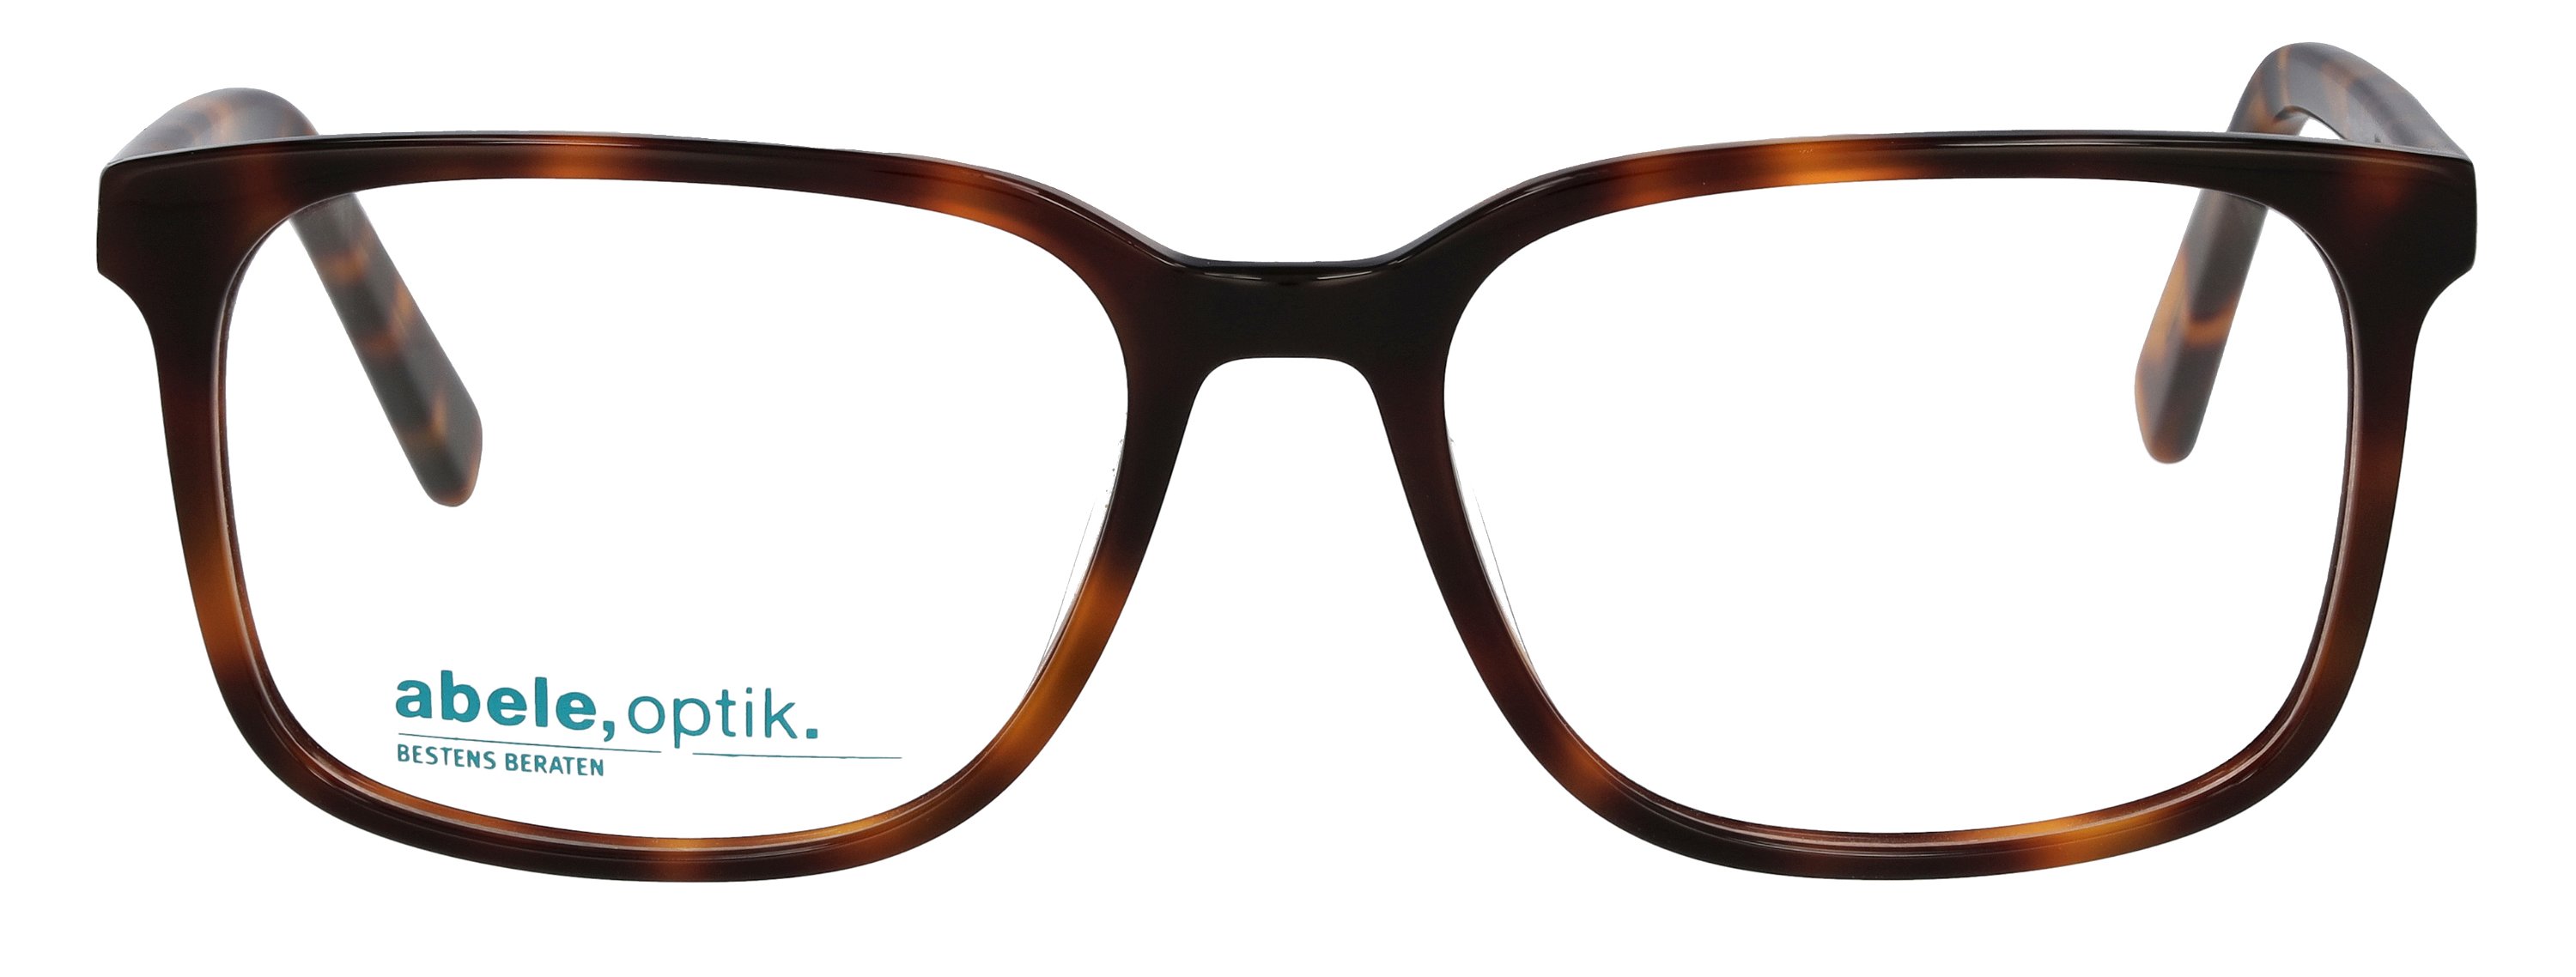 abele optik Brille für Herren 148321 in havanna